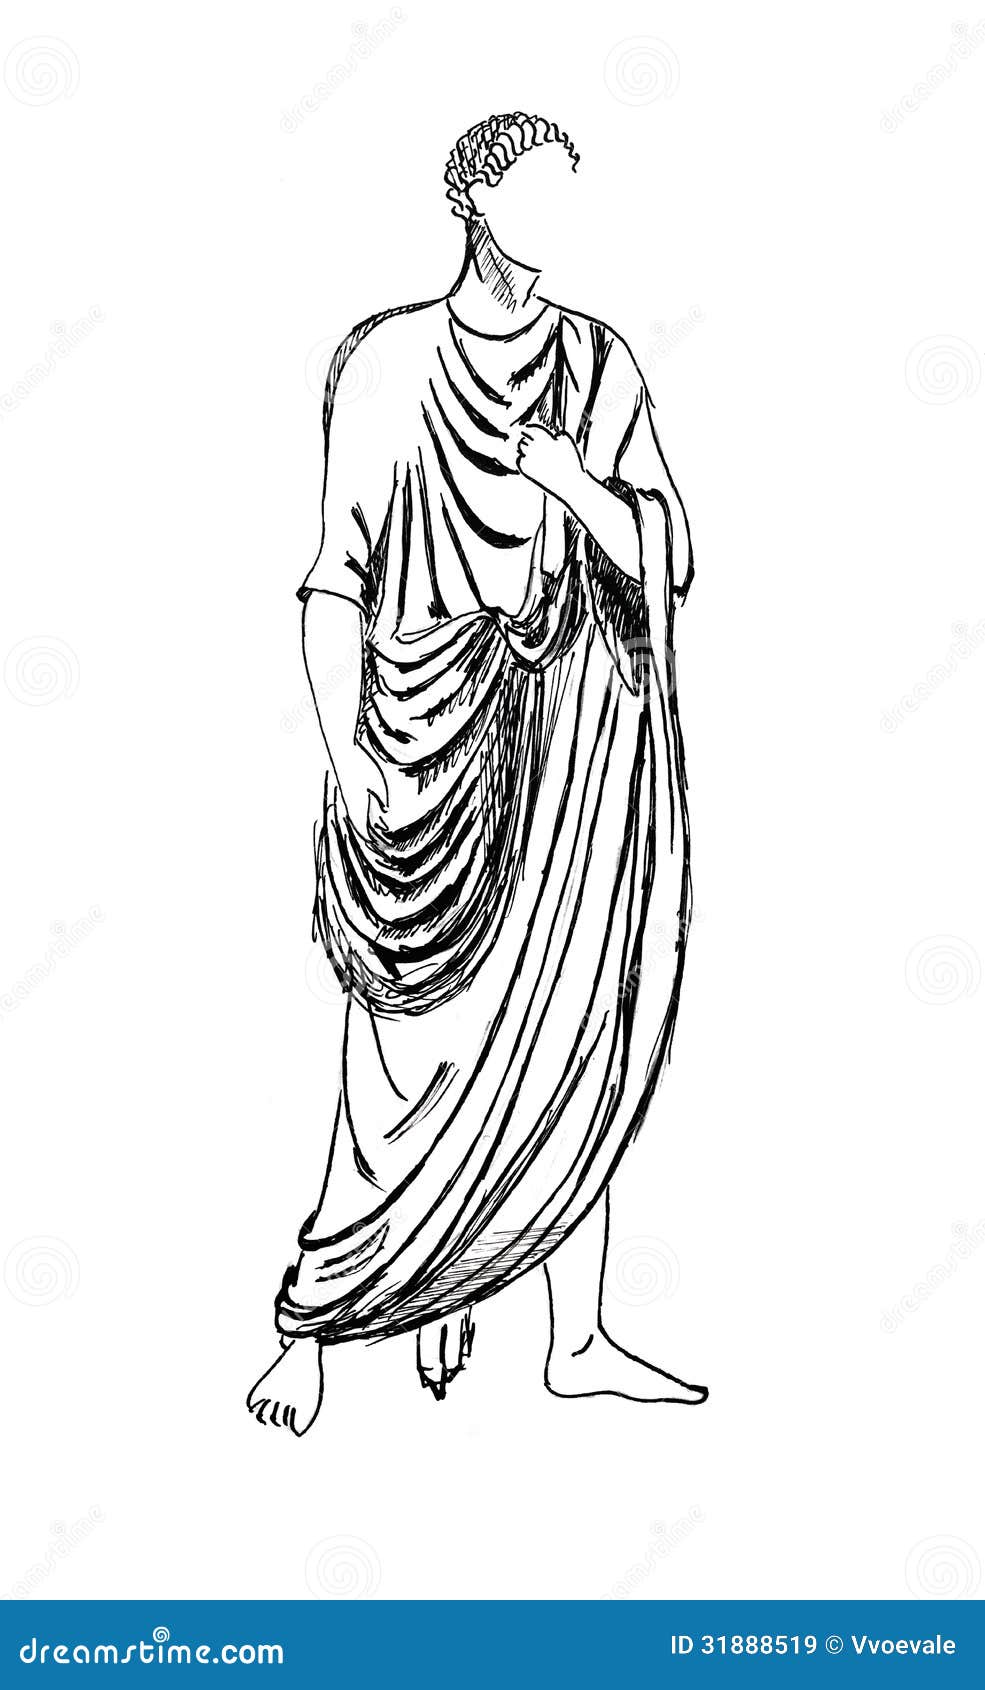 Ancient Roman emperor stock illustration. Illustration of drawing